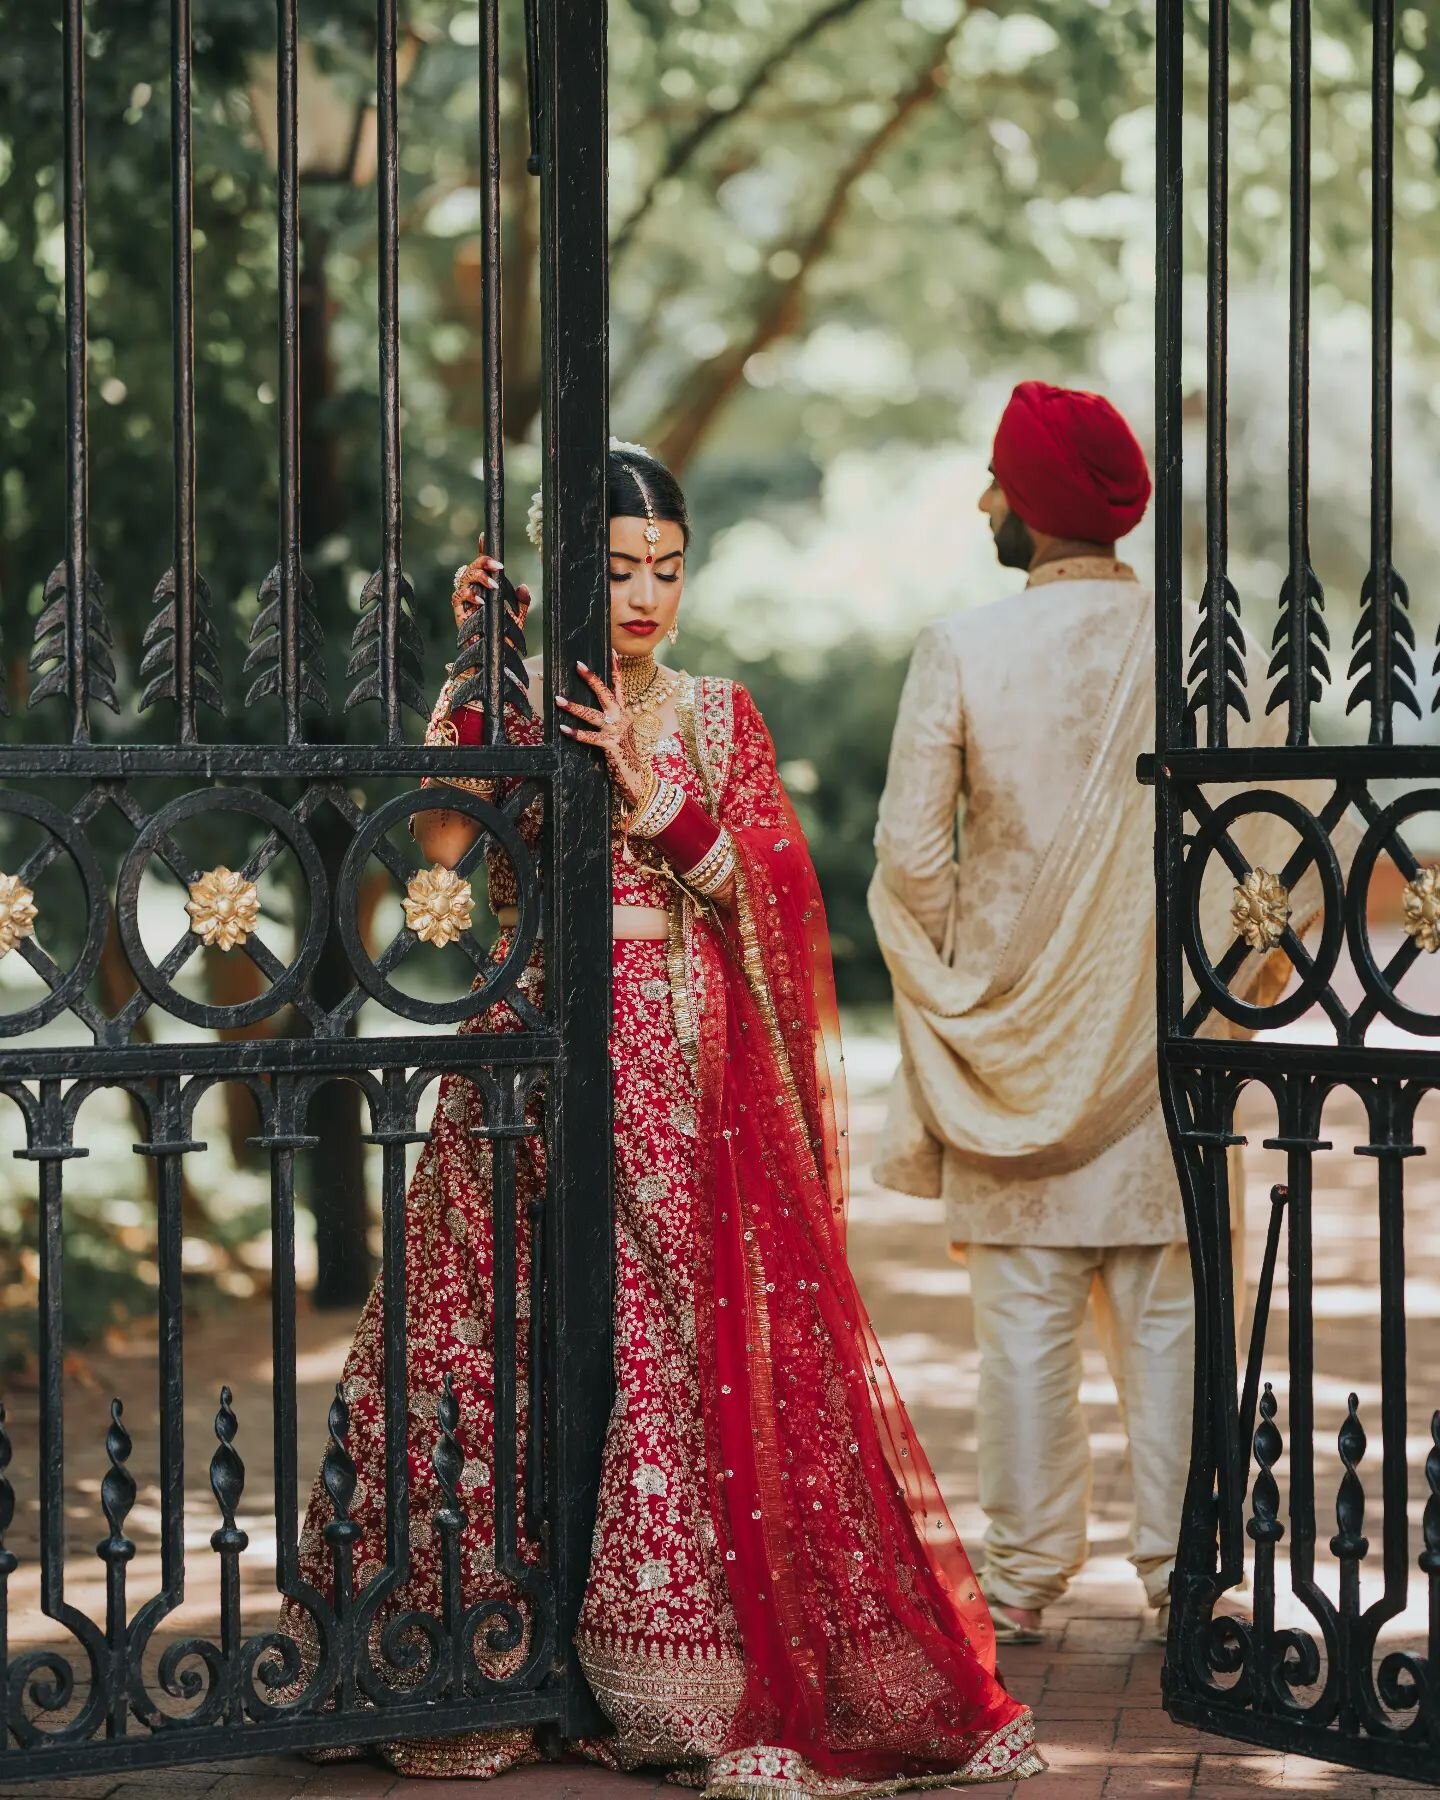 Where's my South Asian crowd!!!! Had a blast shooting this wedding..🤗🤗

.
Limited availability 2023 
Booking 2024
.
.
.
.
.
.
.
.
.

#engaged #wedding #bride #bridetobe #love #weddinginspiration #engagement #weddingplanning #weddingphotography #wed